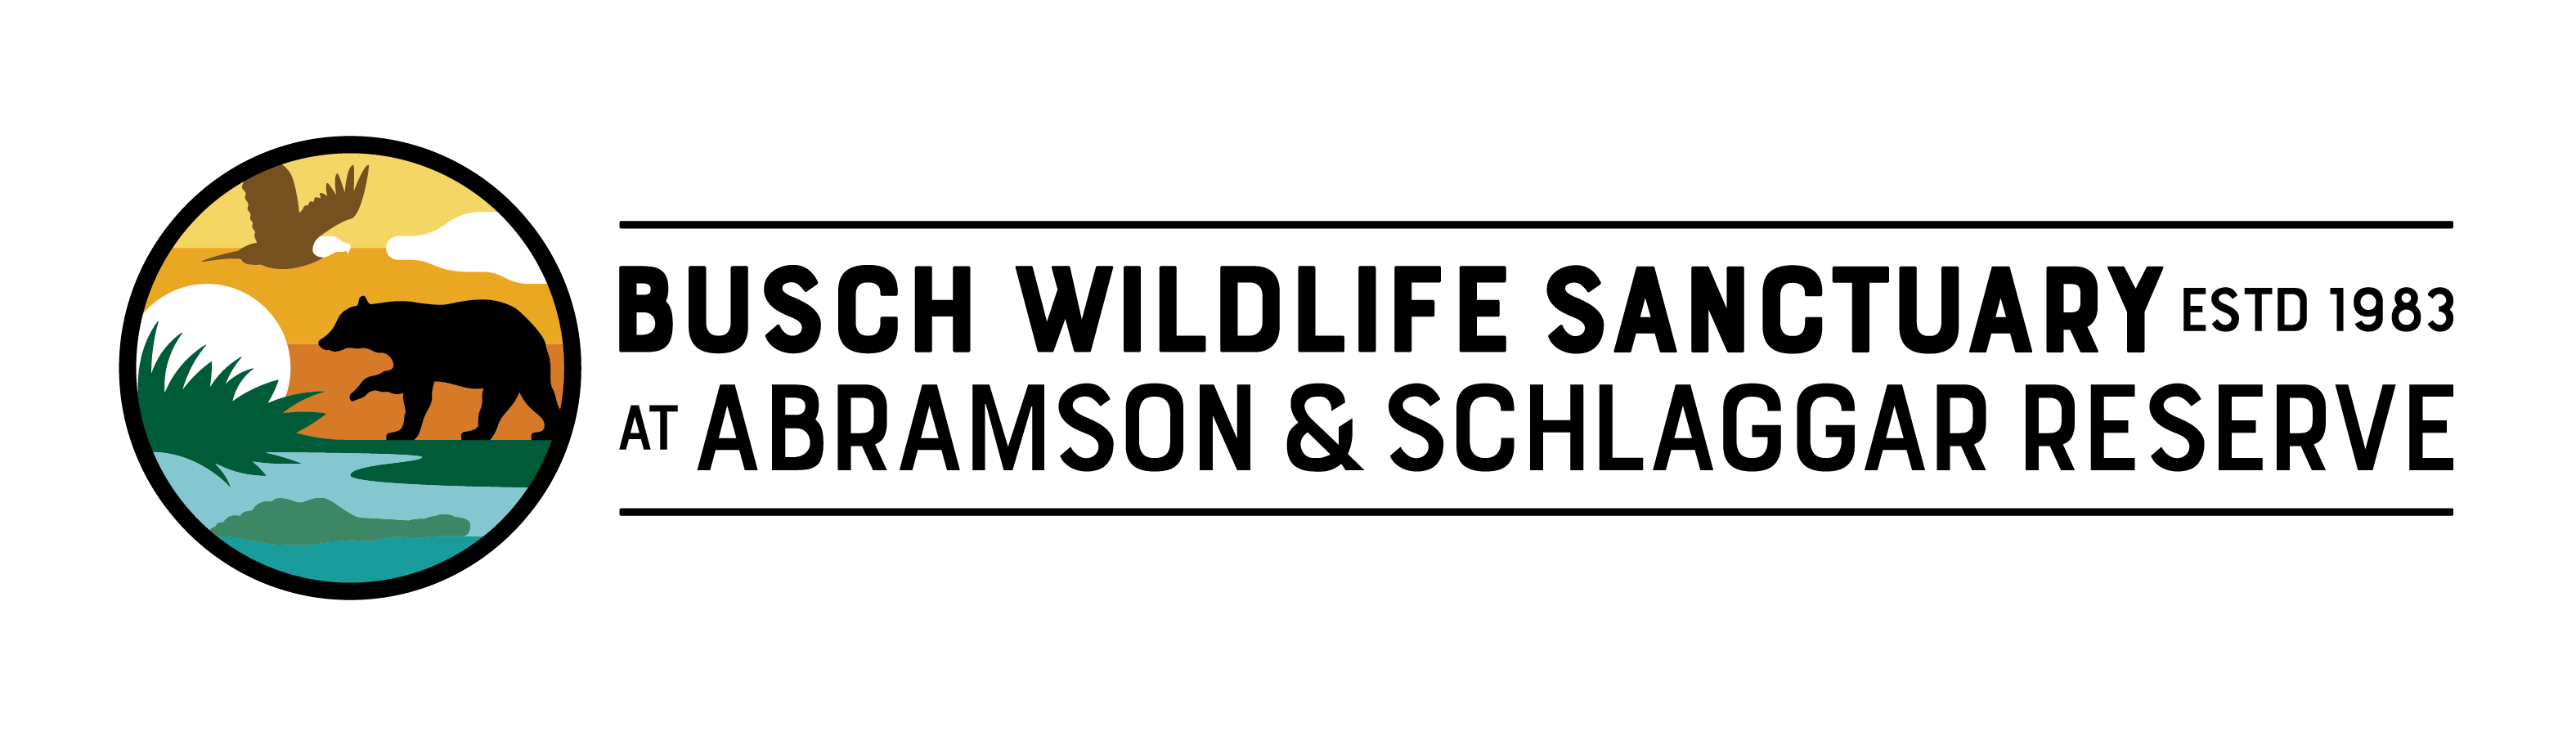 The Busch Wildlife Sanctuary, Inc. 